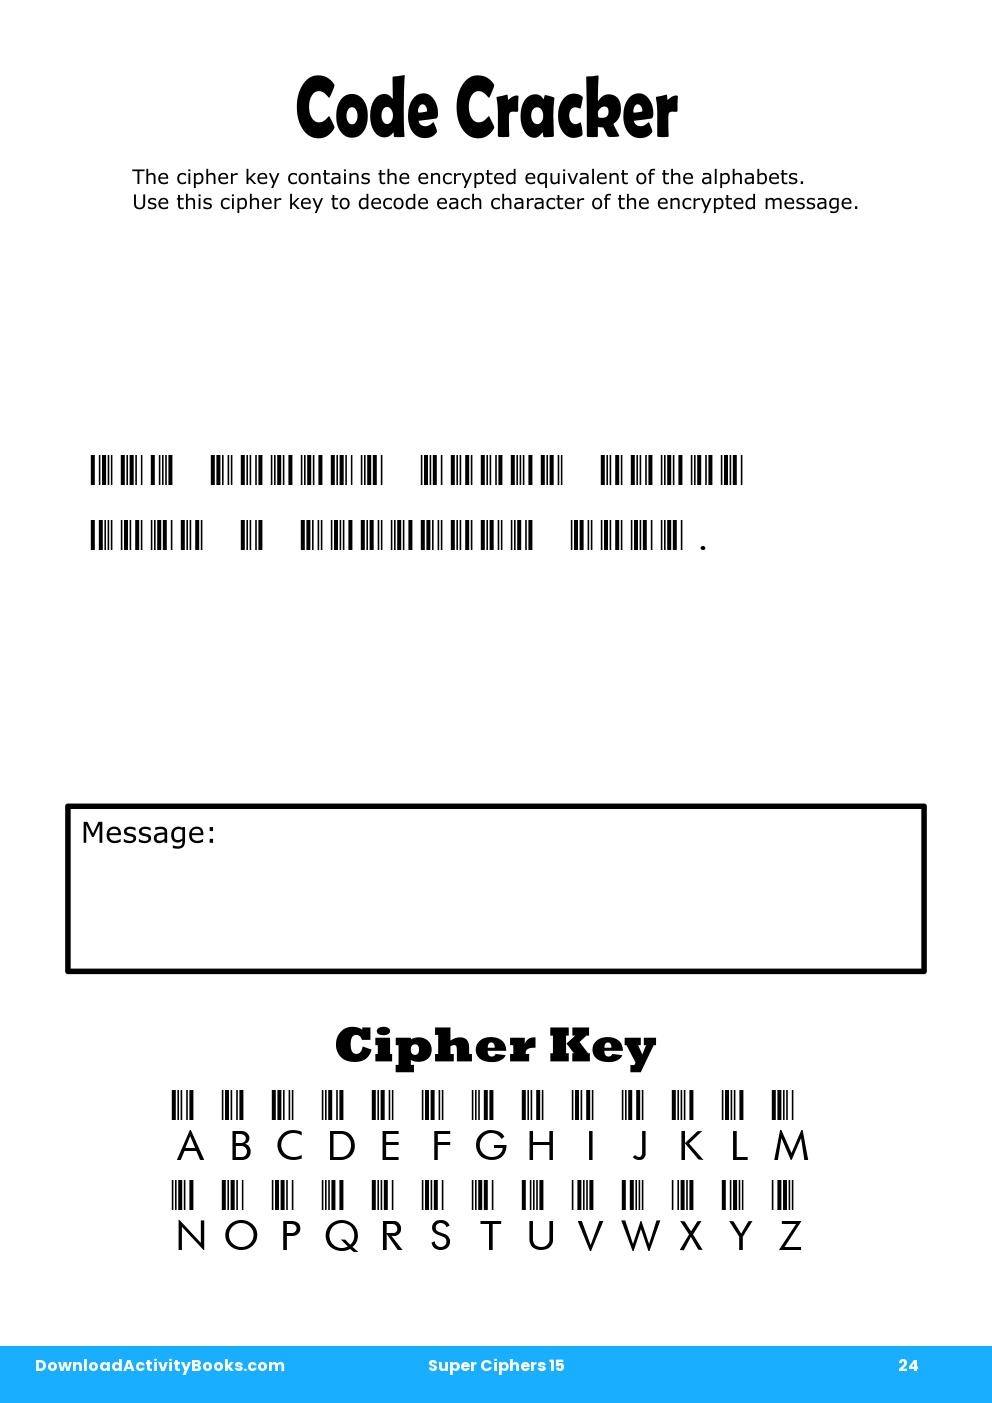 Code Cracker in Super Ciphers 15